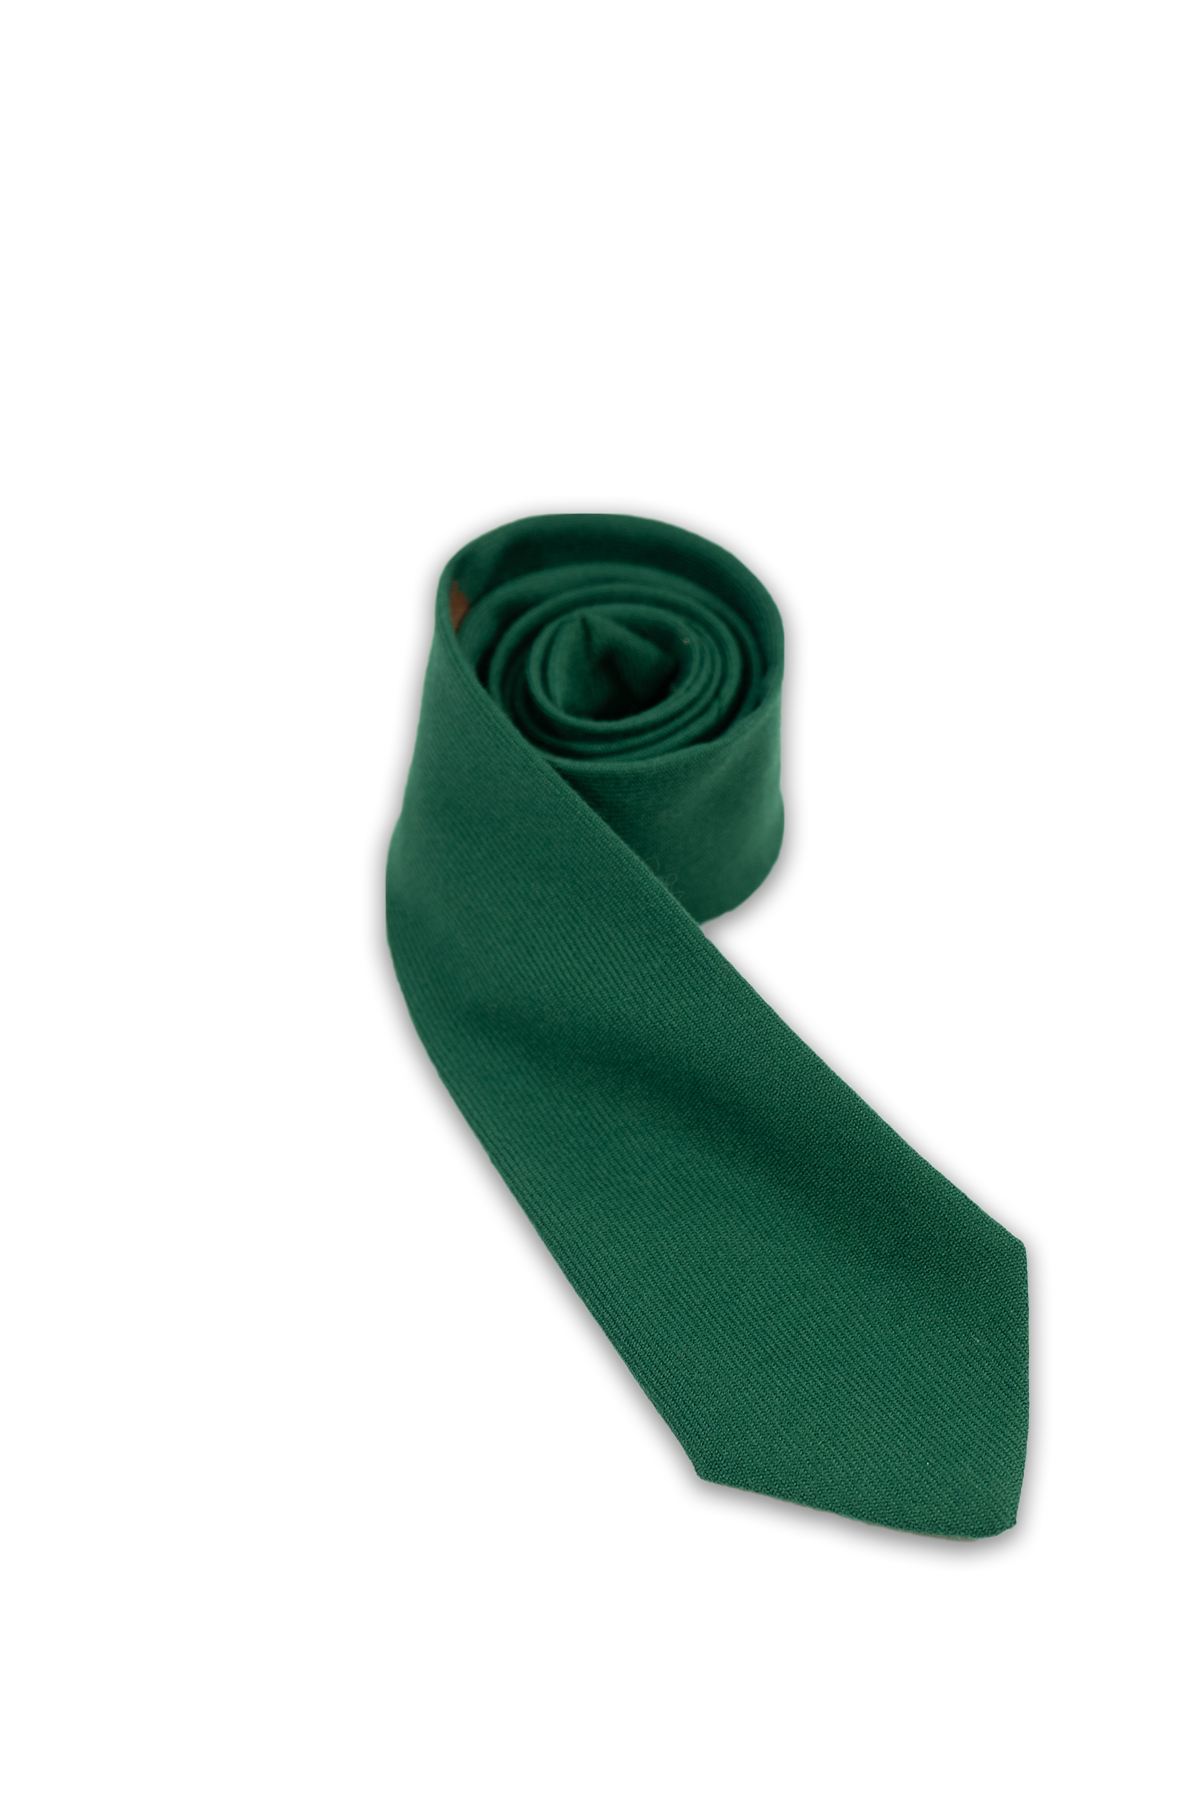 Green Ancient Wool Tie (House of Edgar)